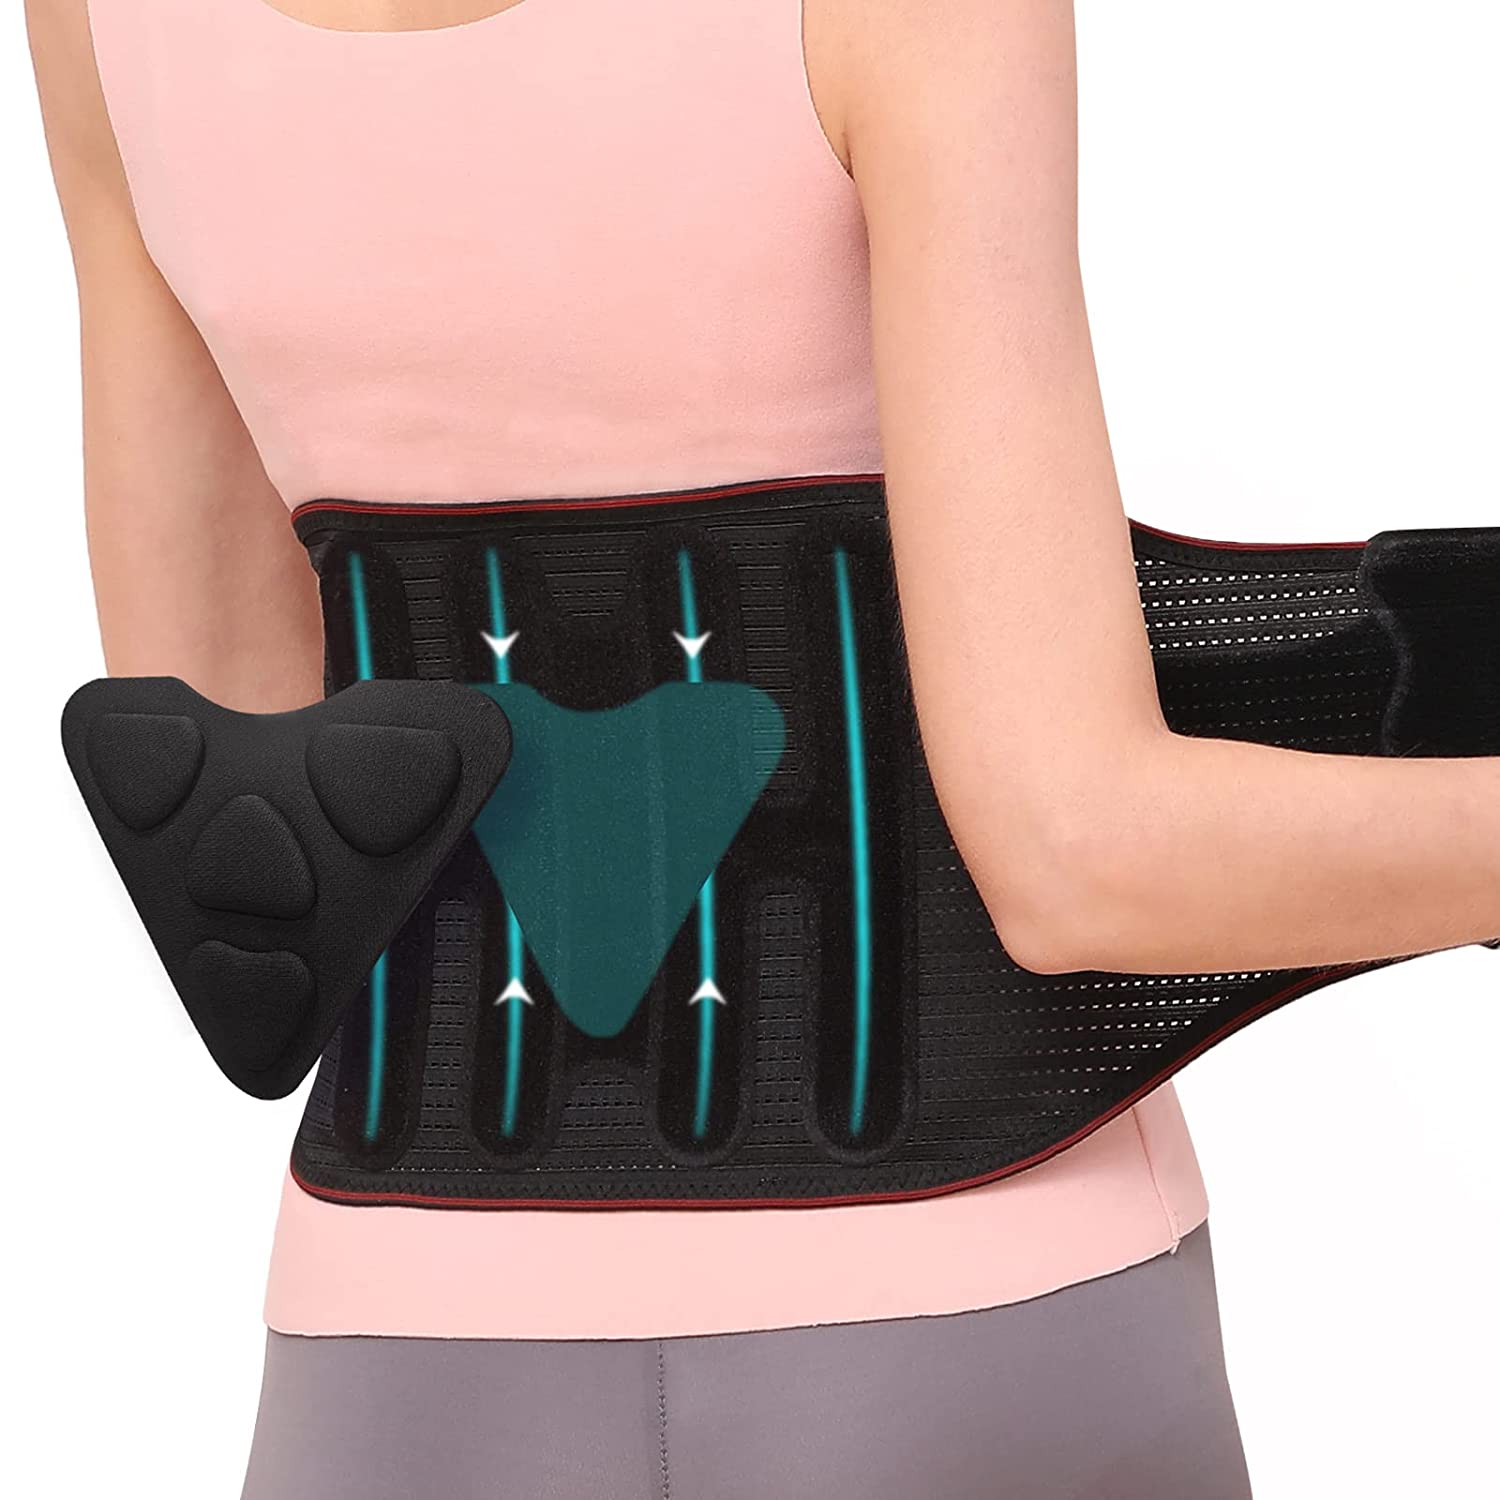 Hameison Back Brace Lumbar Support For Lower Back Pain